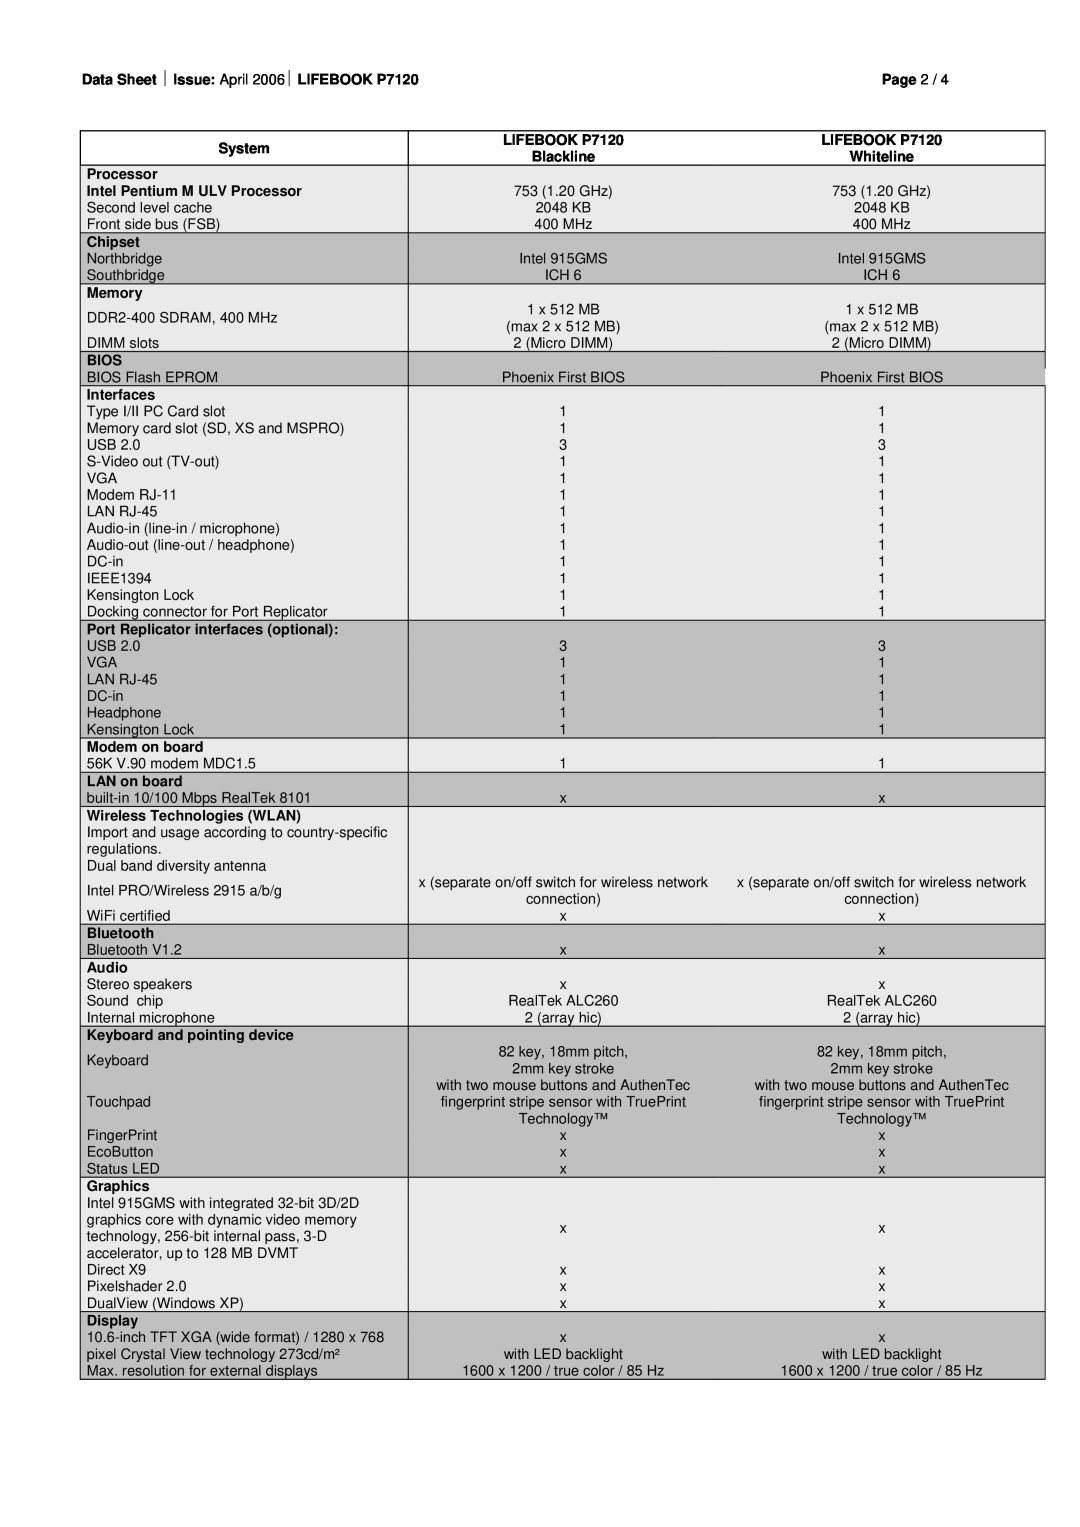 Fujitsu Siemens Computers manual Data Sheet Issue April 2006 LIFEBOOK P7120, Blackline, Whiteline 